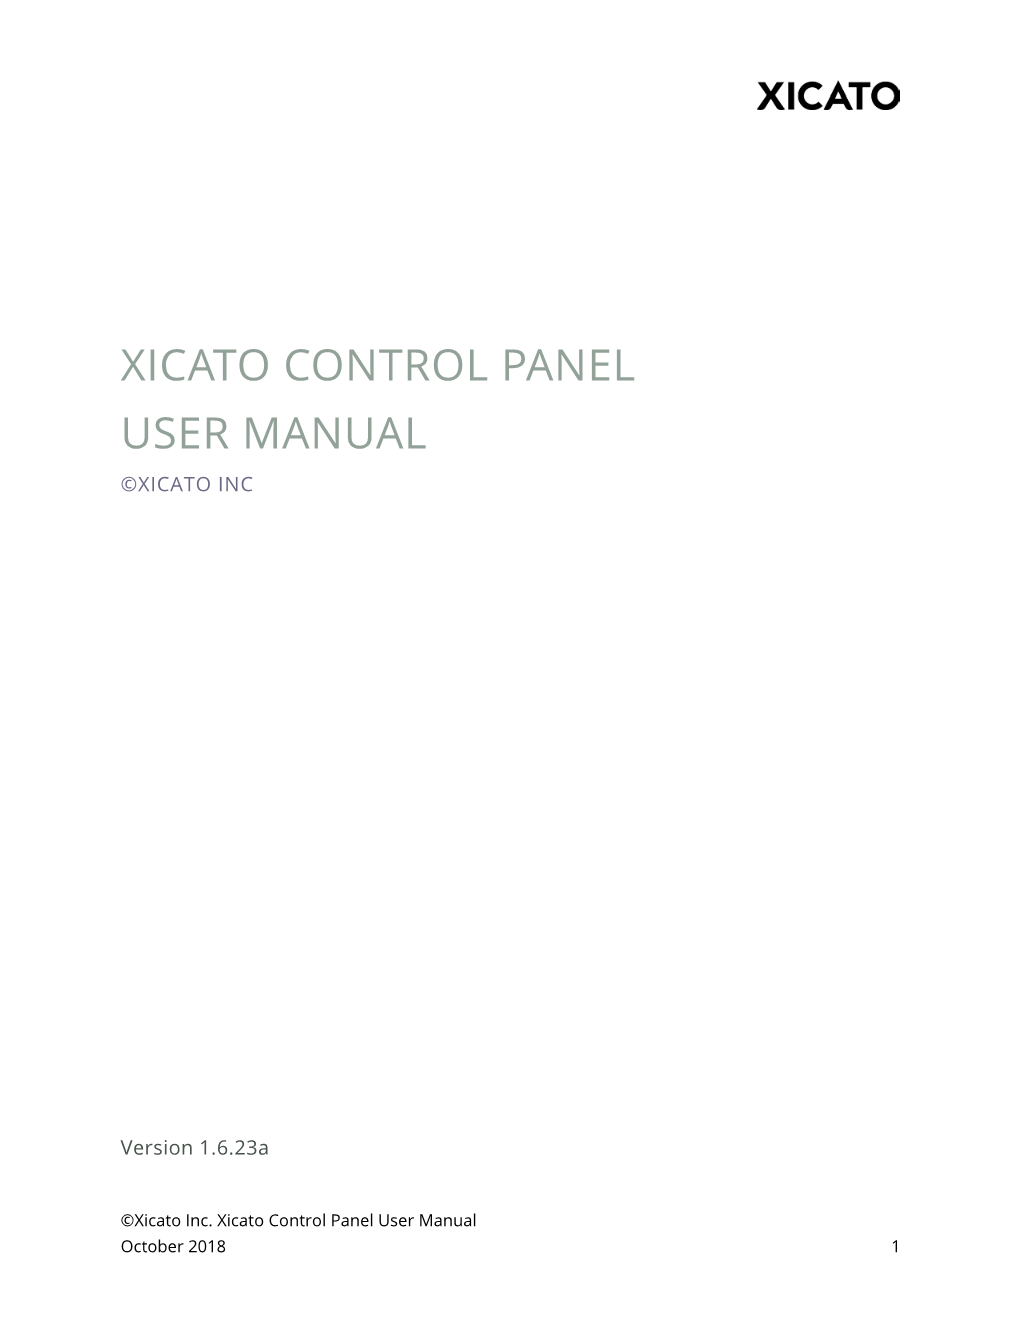 Xicato Control Panel User Manual ©Xicato Inc